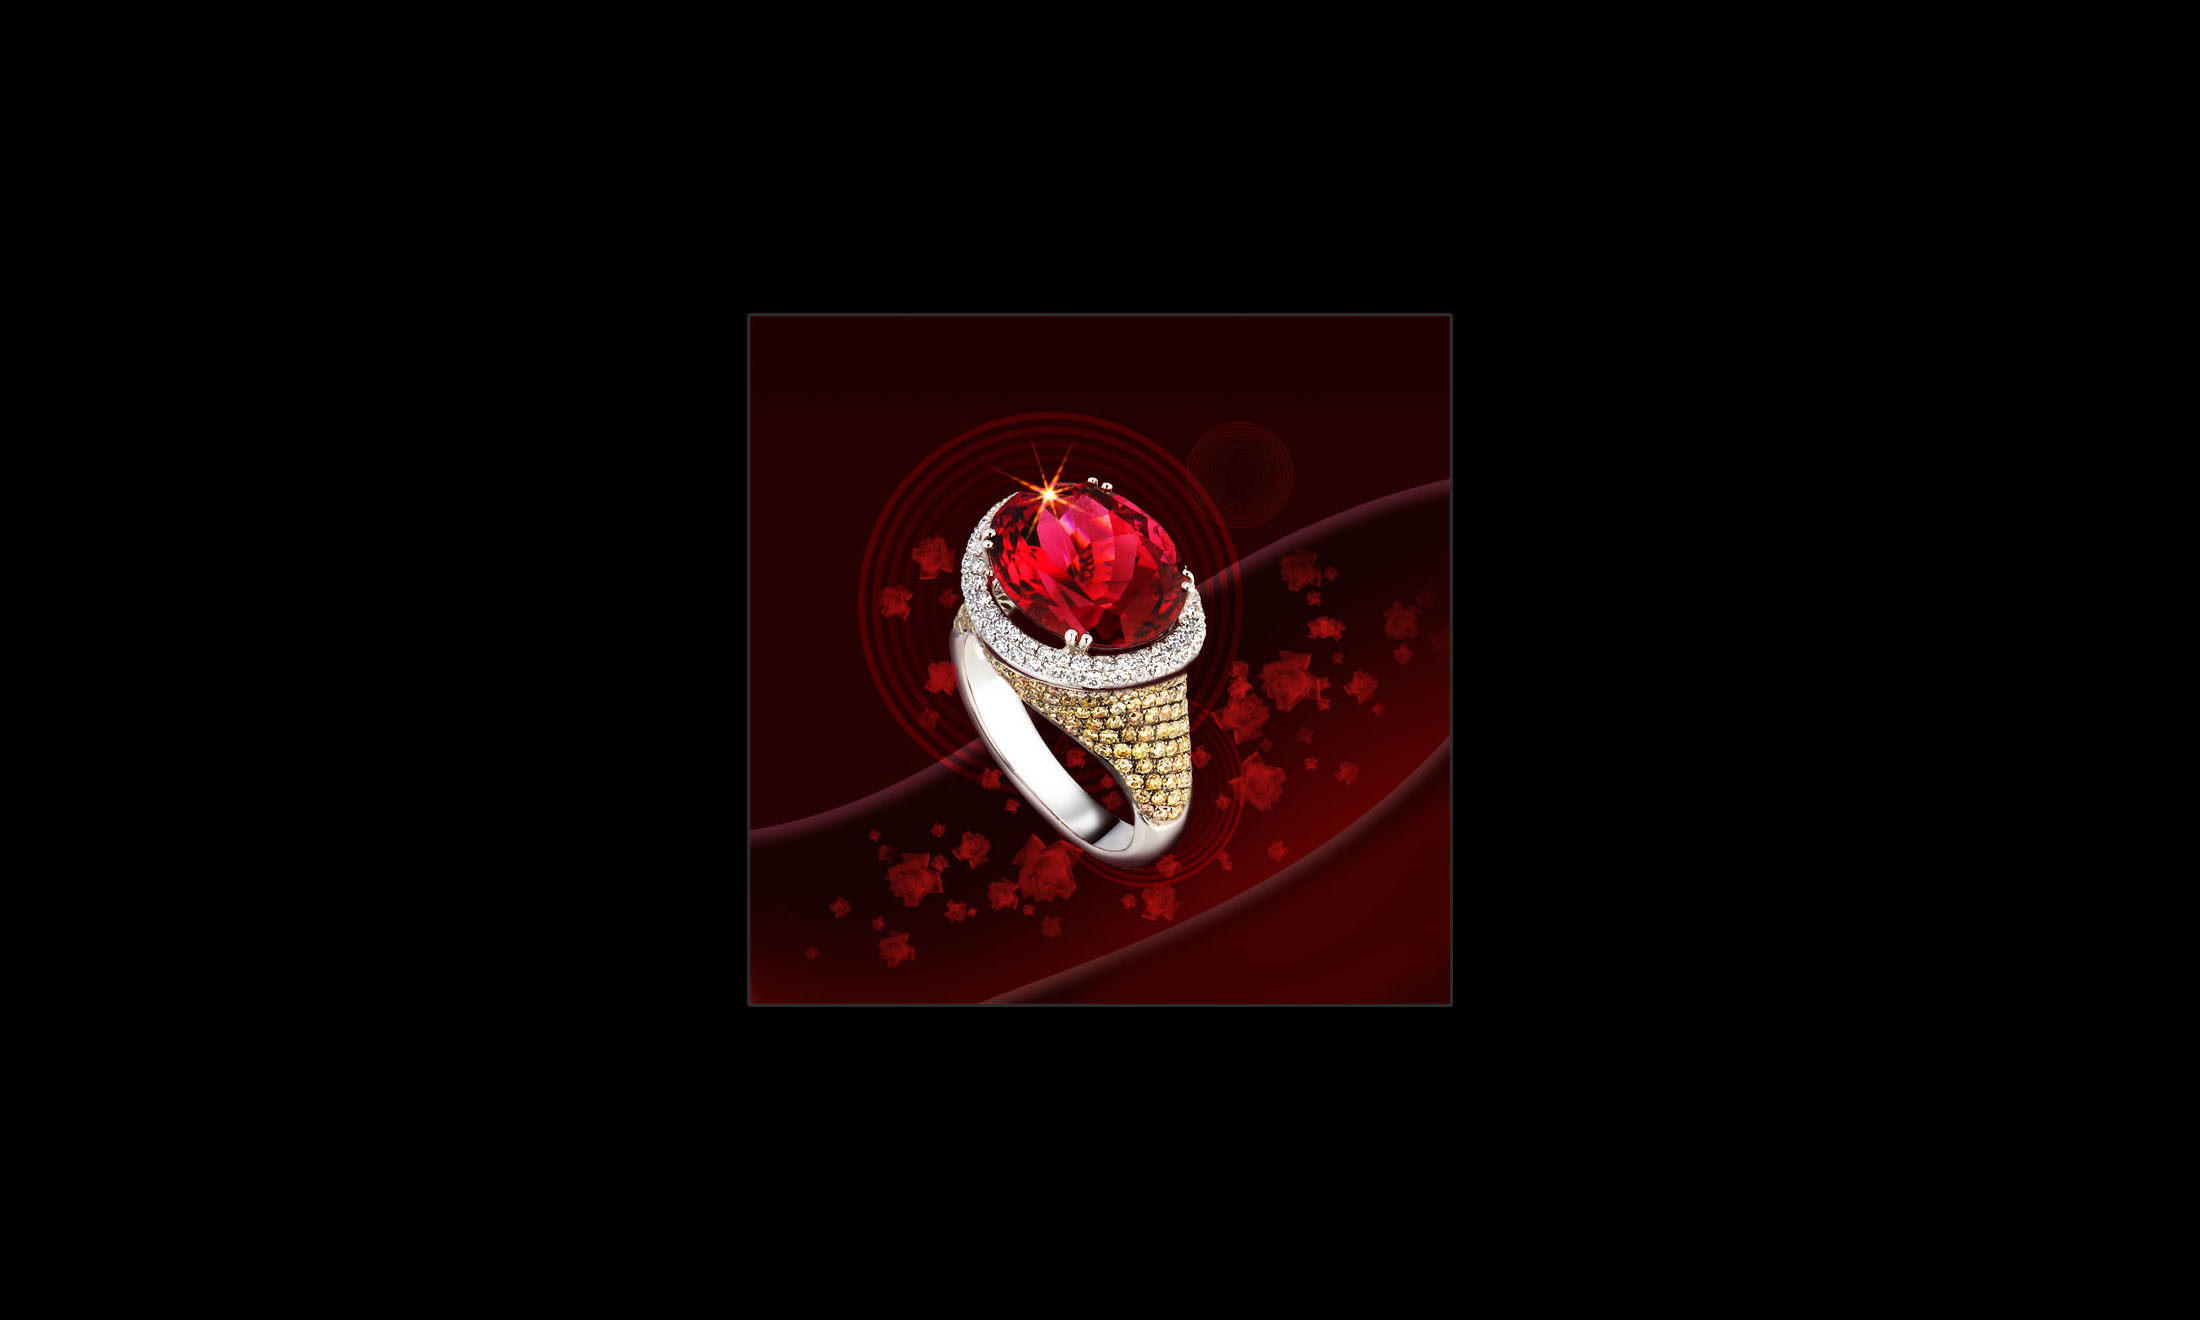 Ruby diamond ring